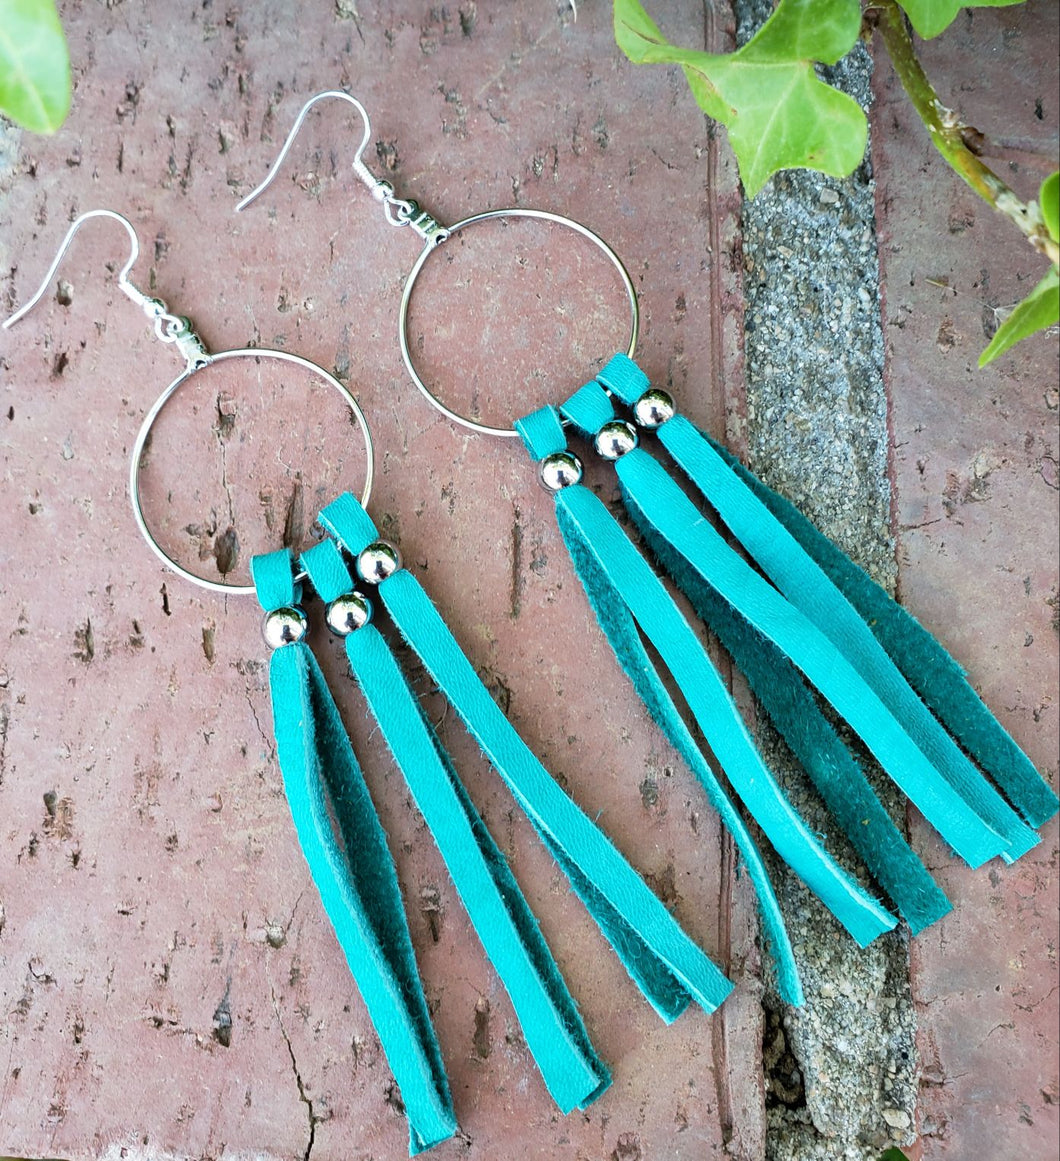 Turquoise fringe leather earrings